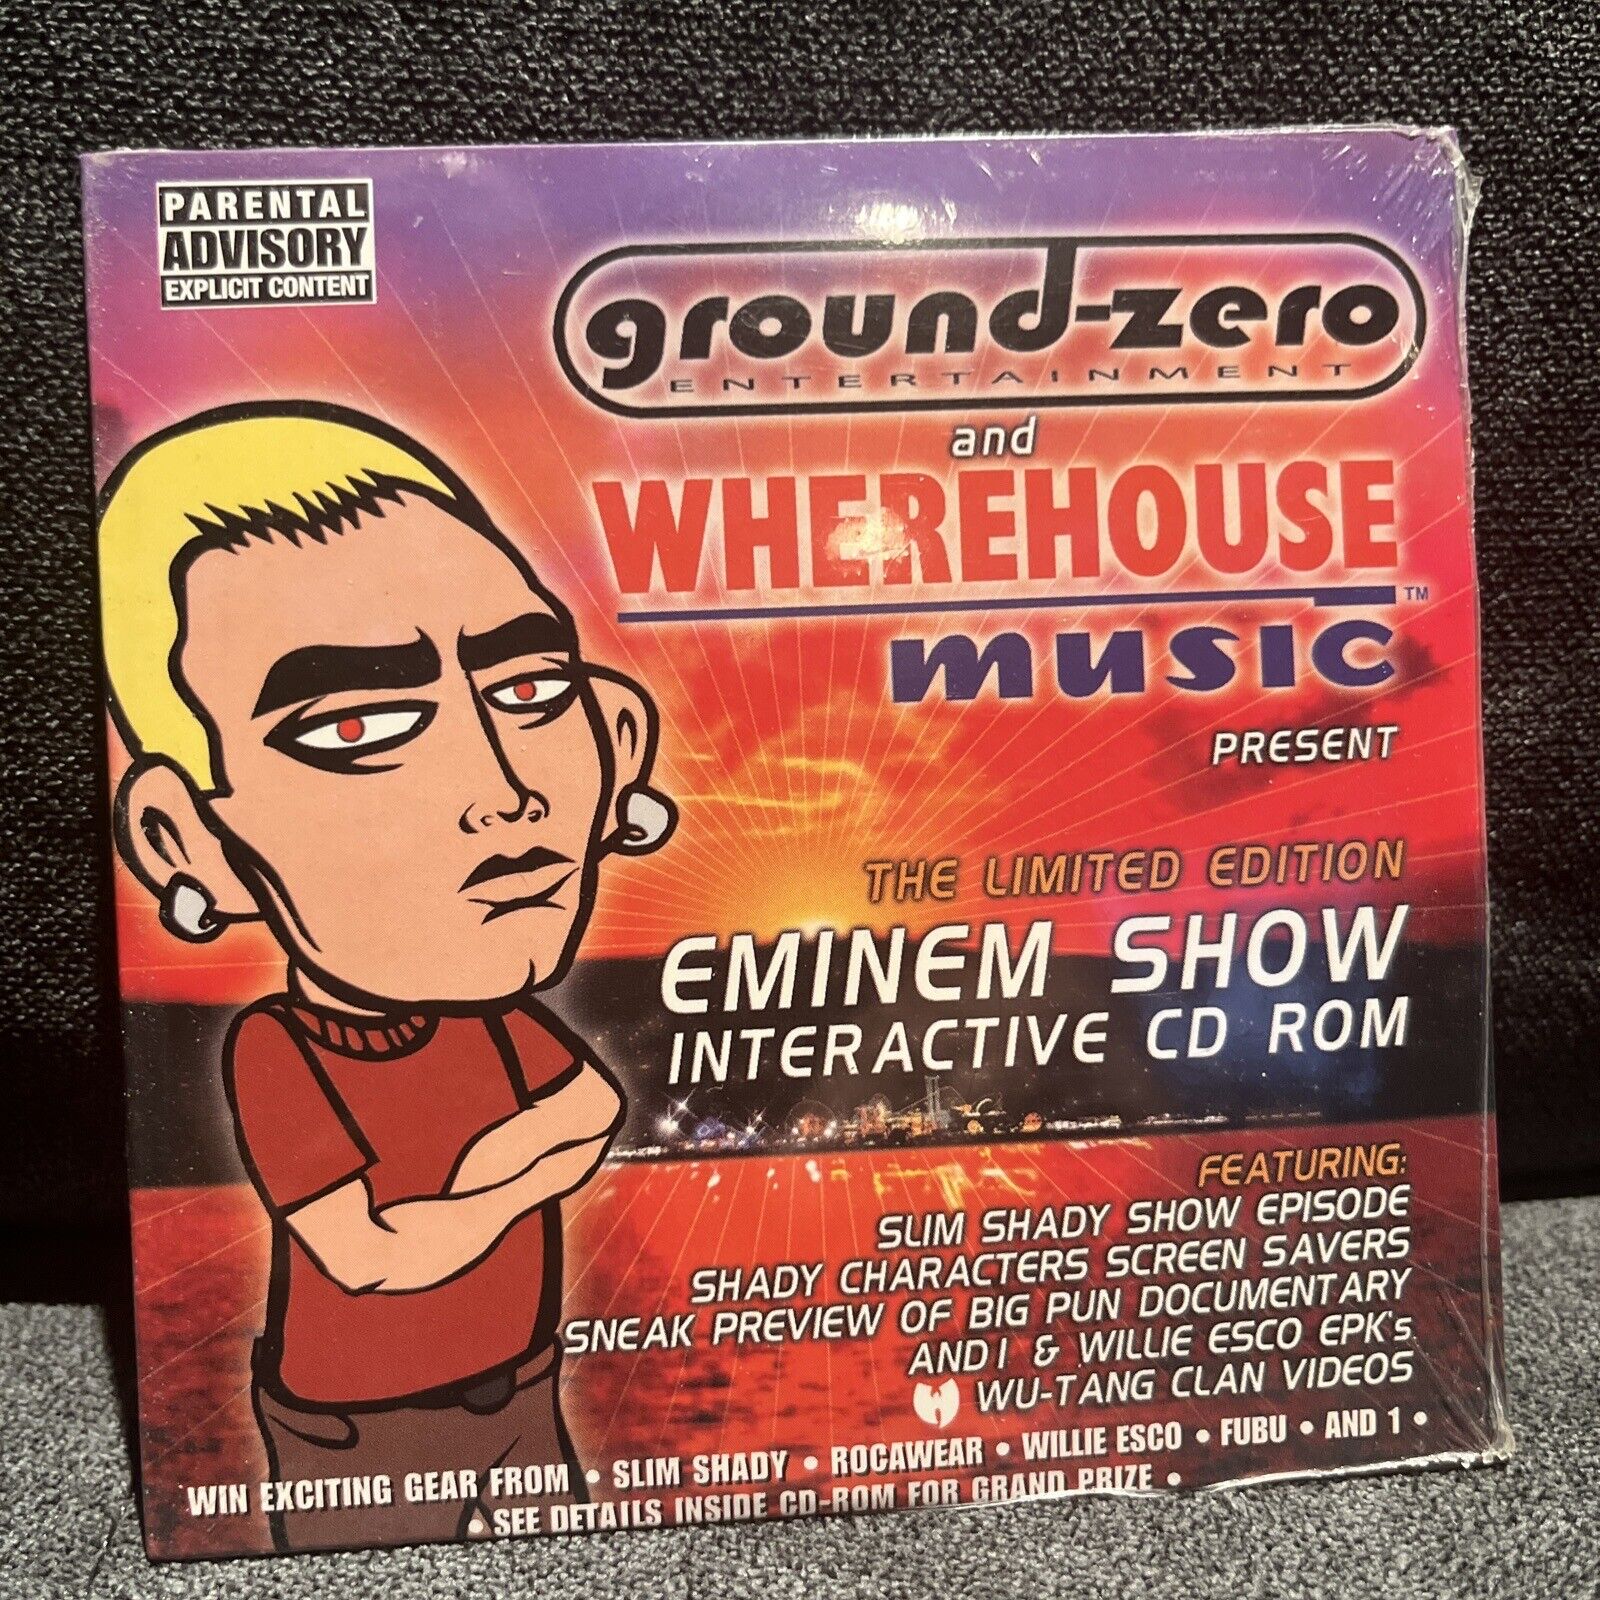 Ground Zero Wherehouse Music  Eminem Show Interactive CD Rom Limited Edition CD